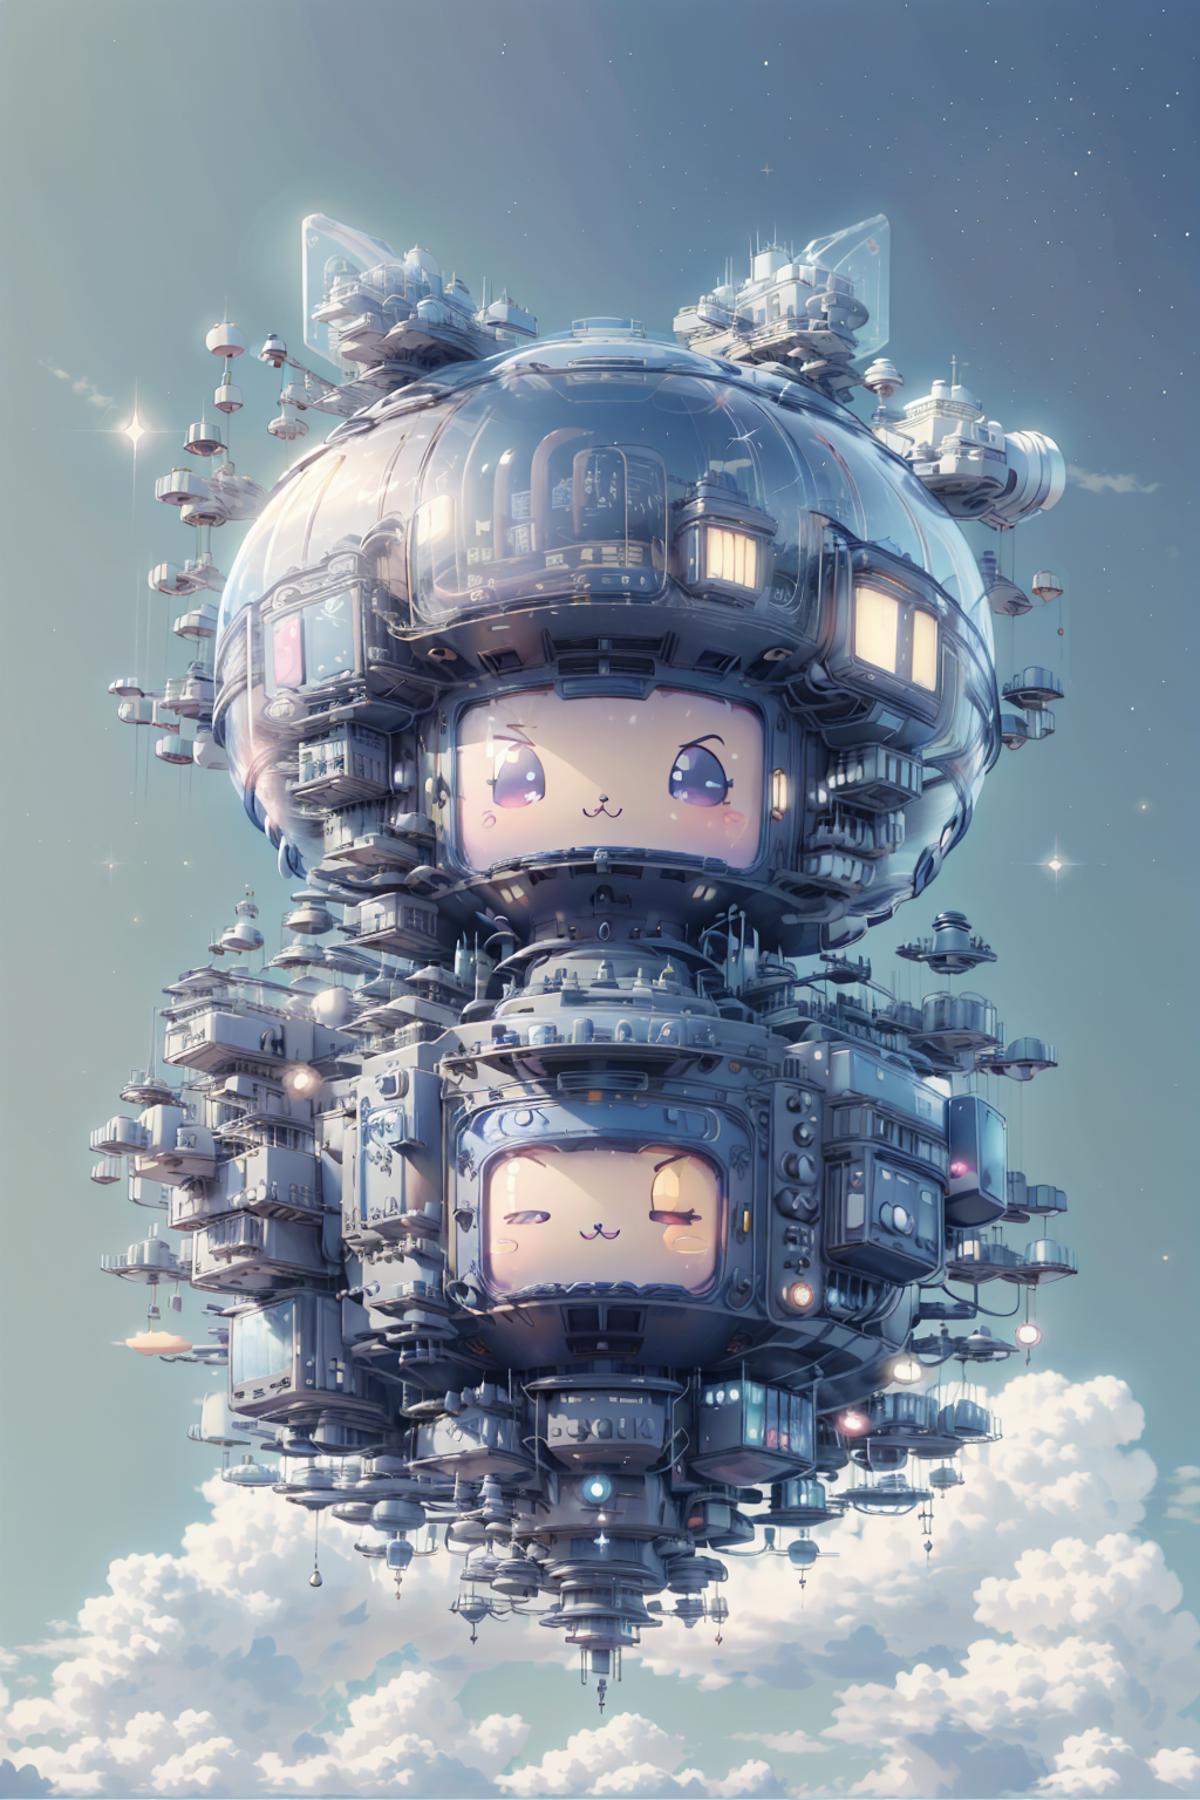 巨大透明飞船|Huge transparent spaceship image by Neo_cute